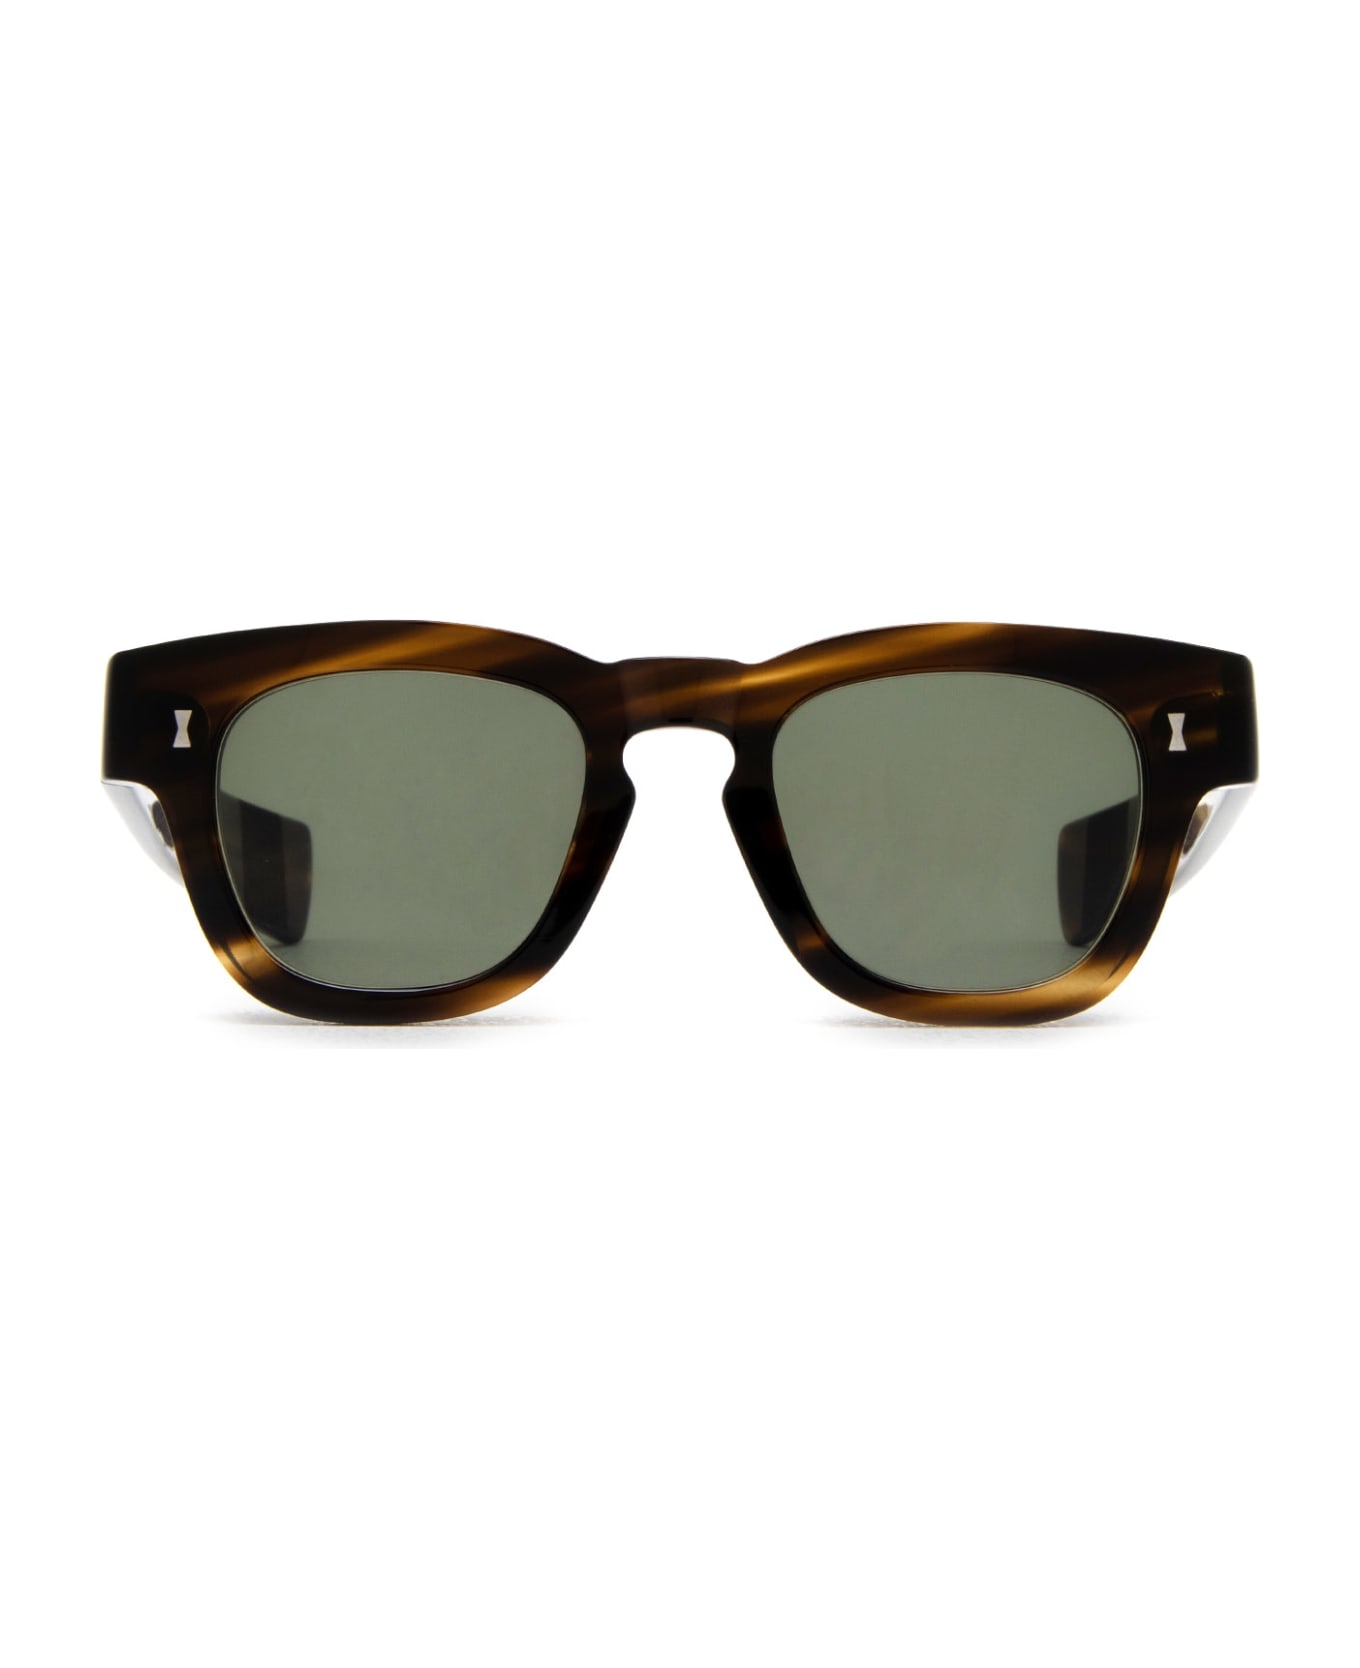 Cubitts Cruikshank Sun Olive Sunglasses - Olive